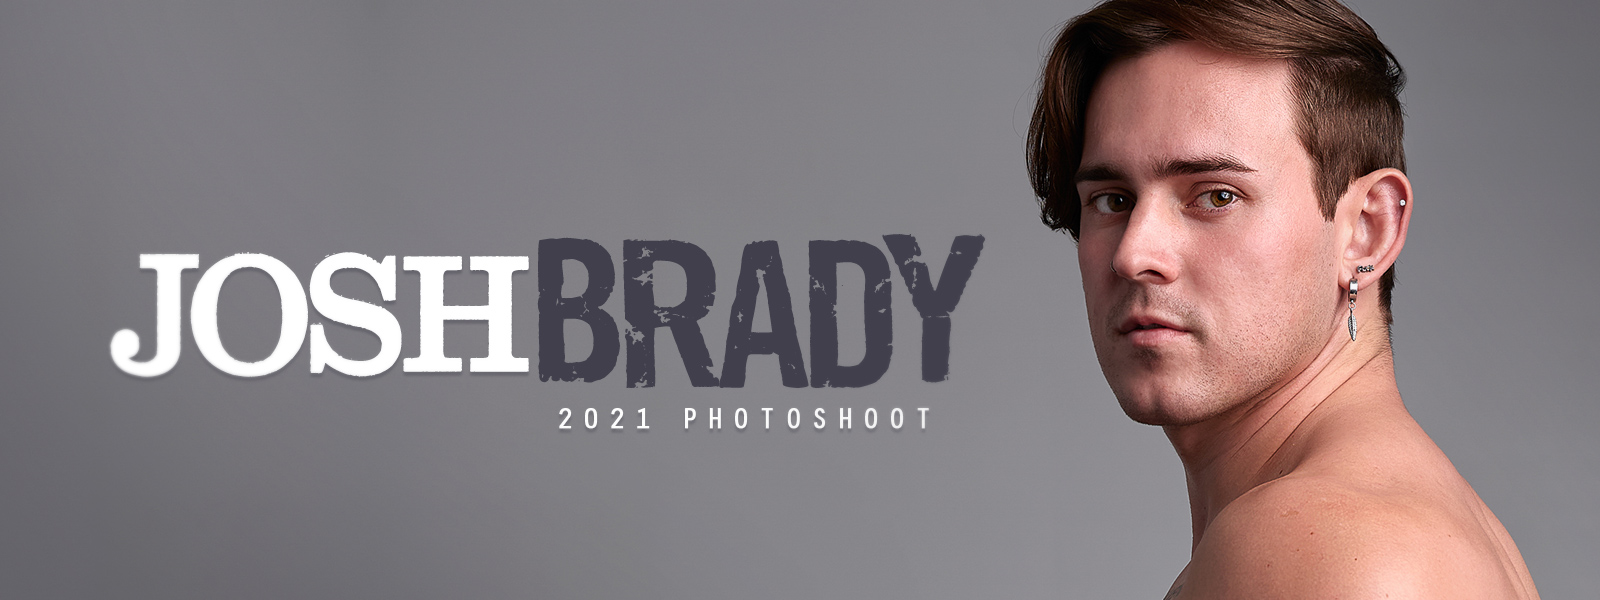 Josh Brady 2021 Photoshoot